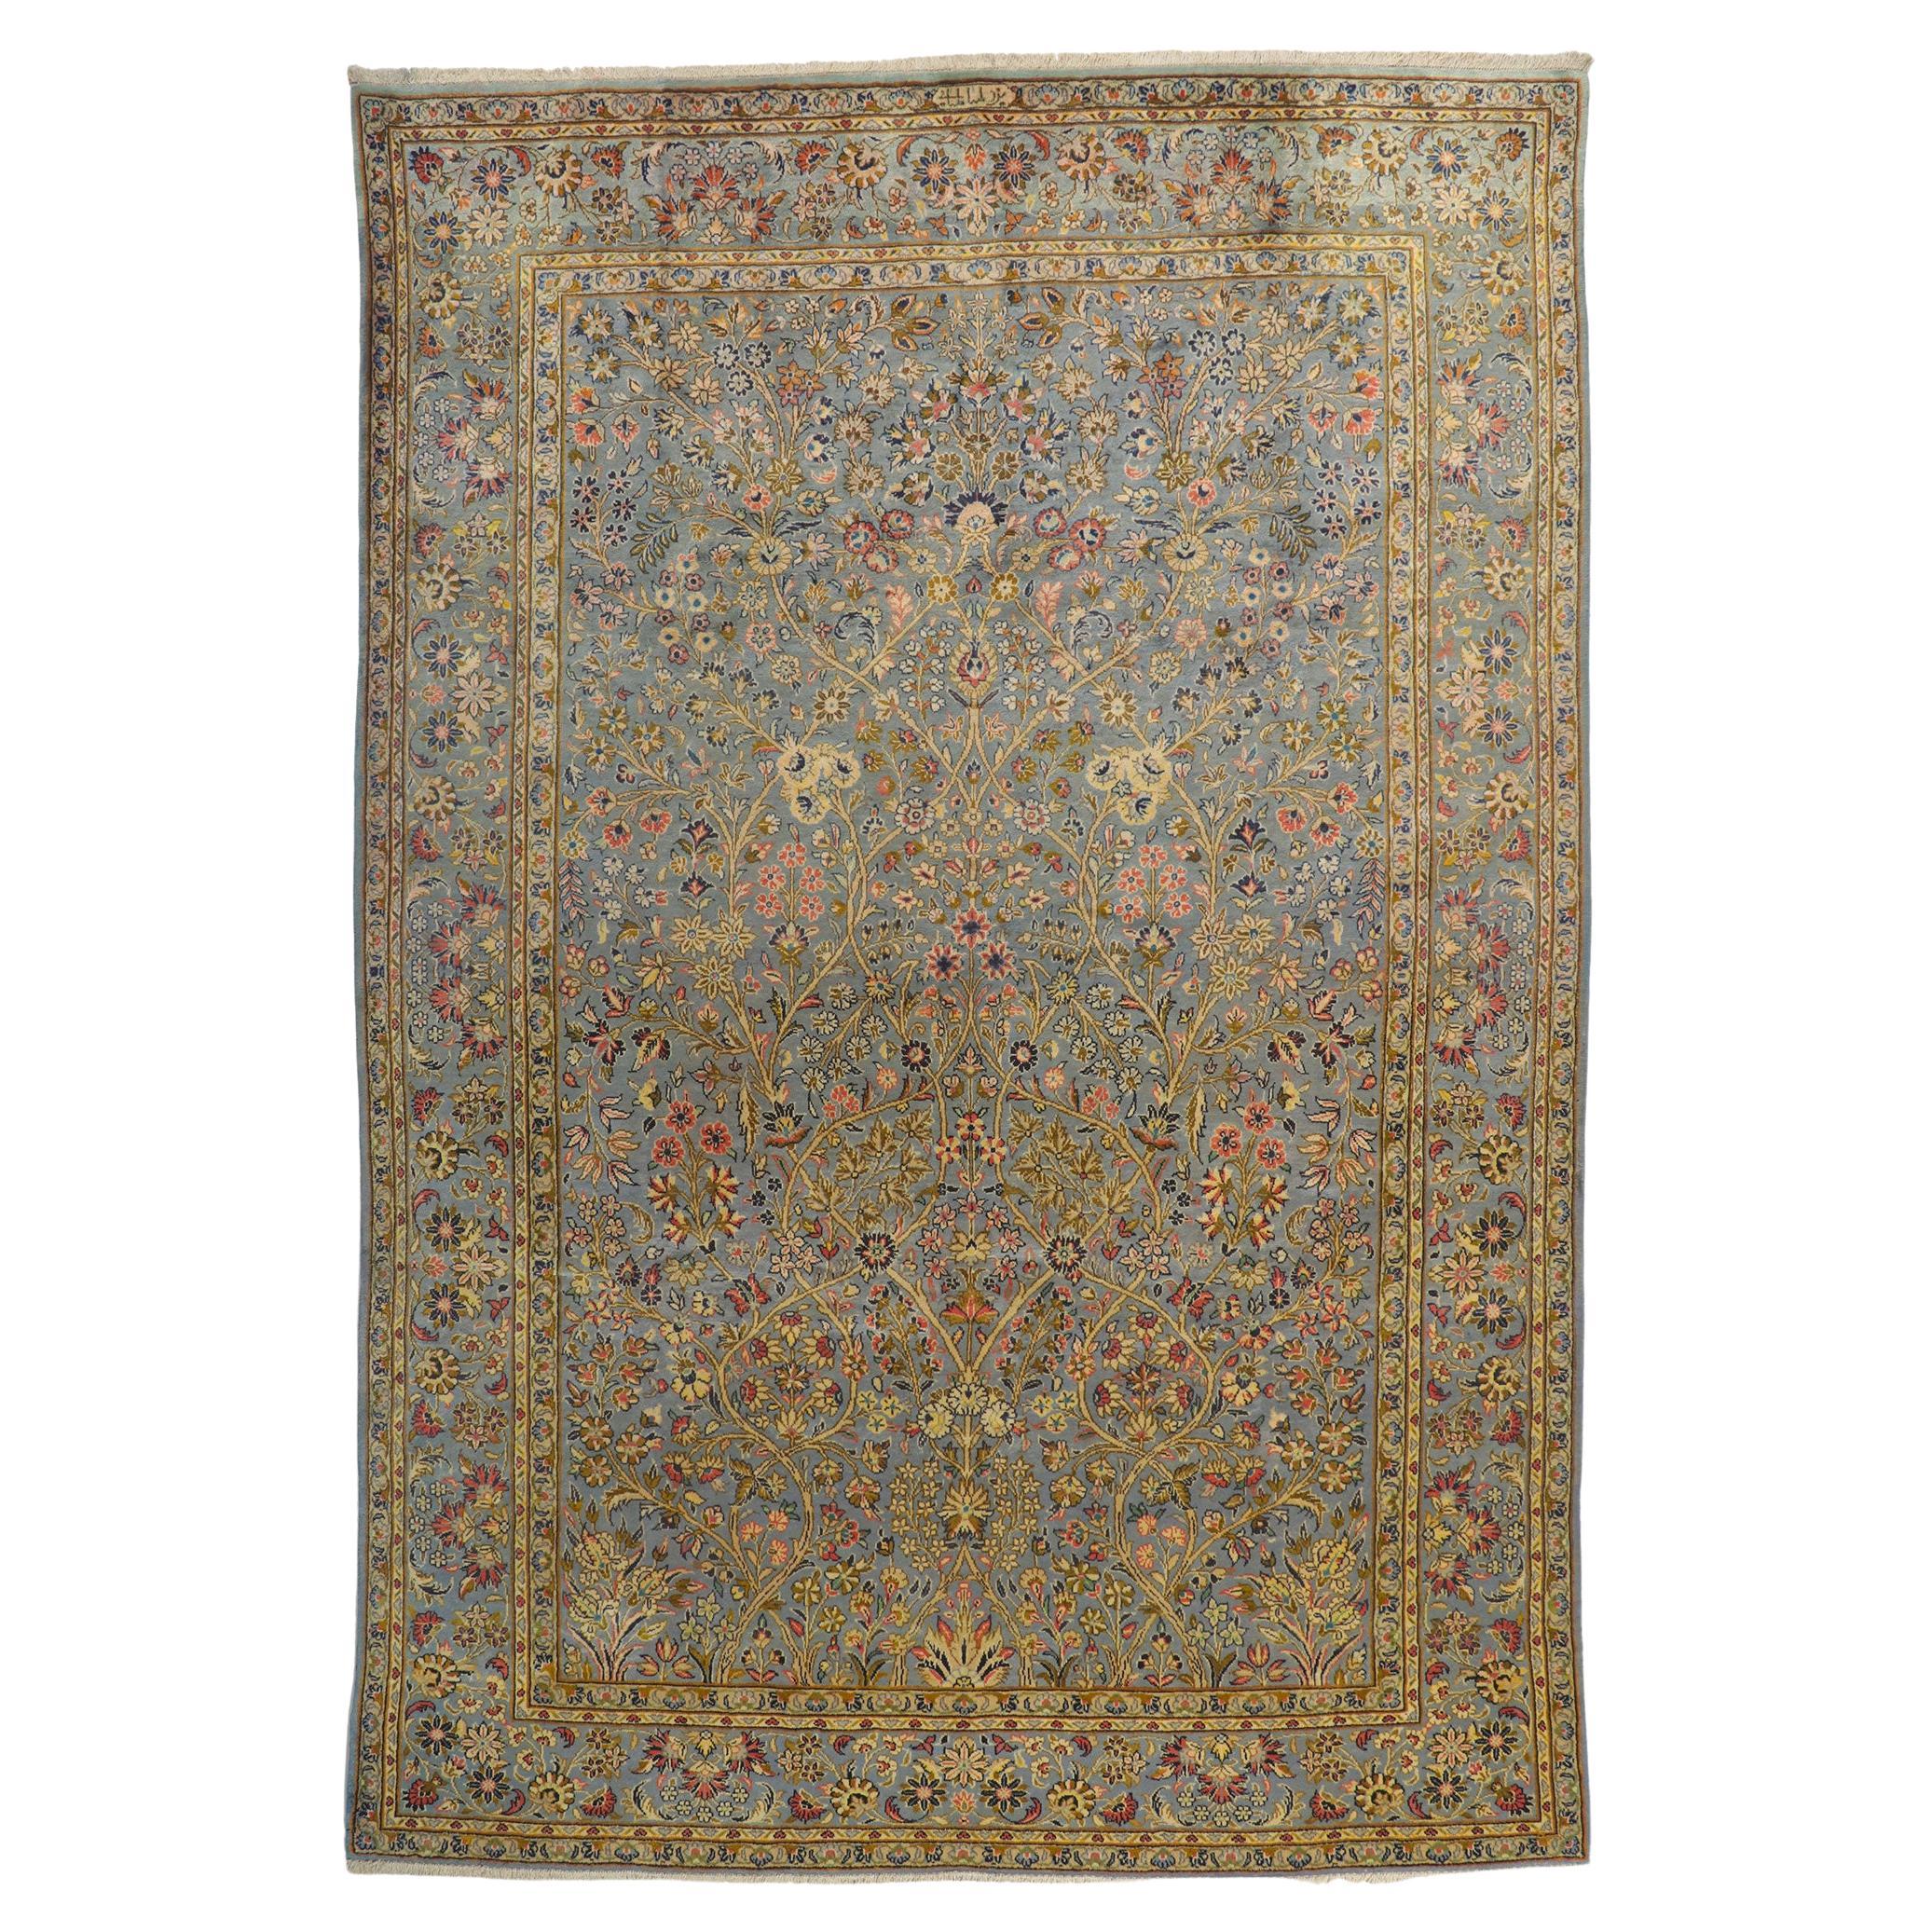 Signed Vintage Persian Kashan Rug, Refined Tranquility Meets Timeless Elegance